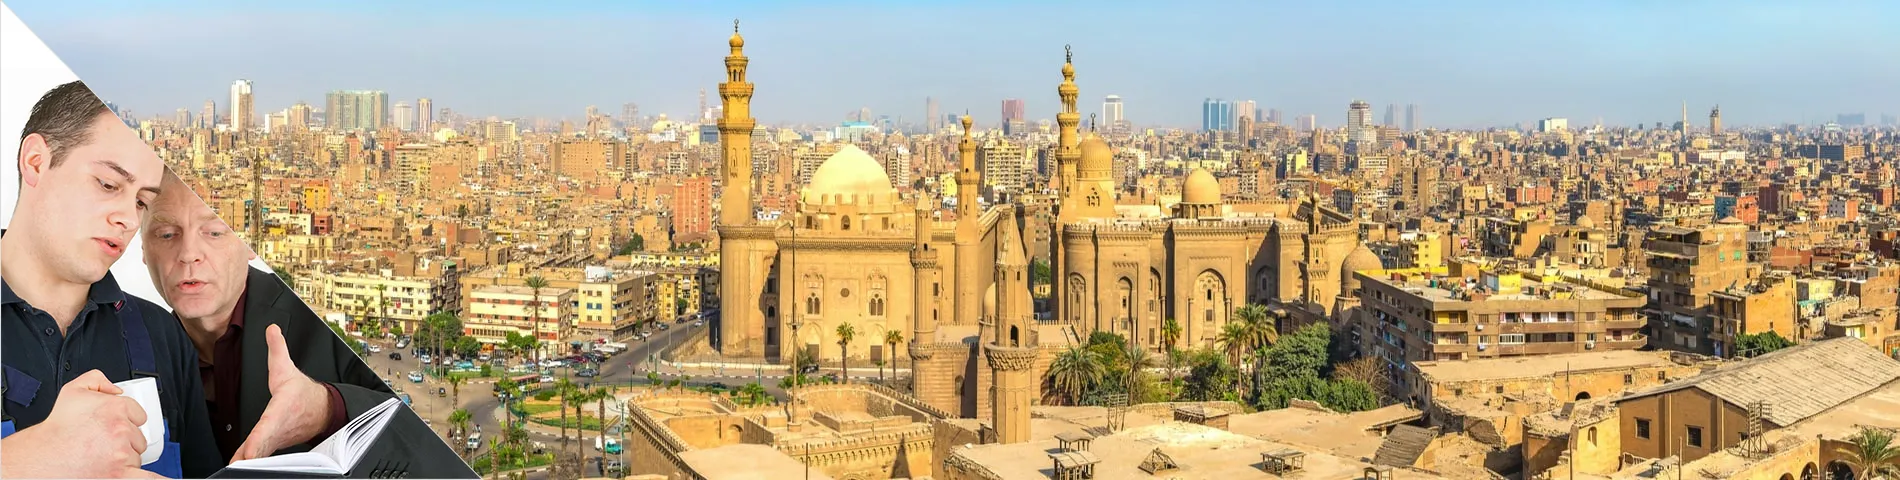 El Cairo - Clases Particulares